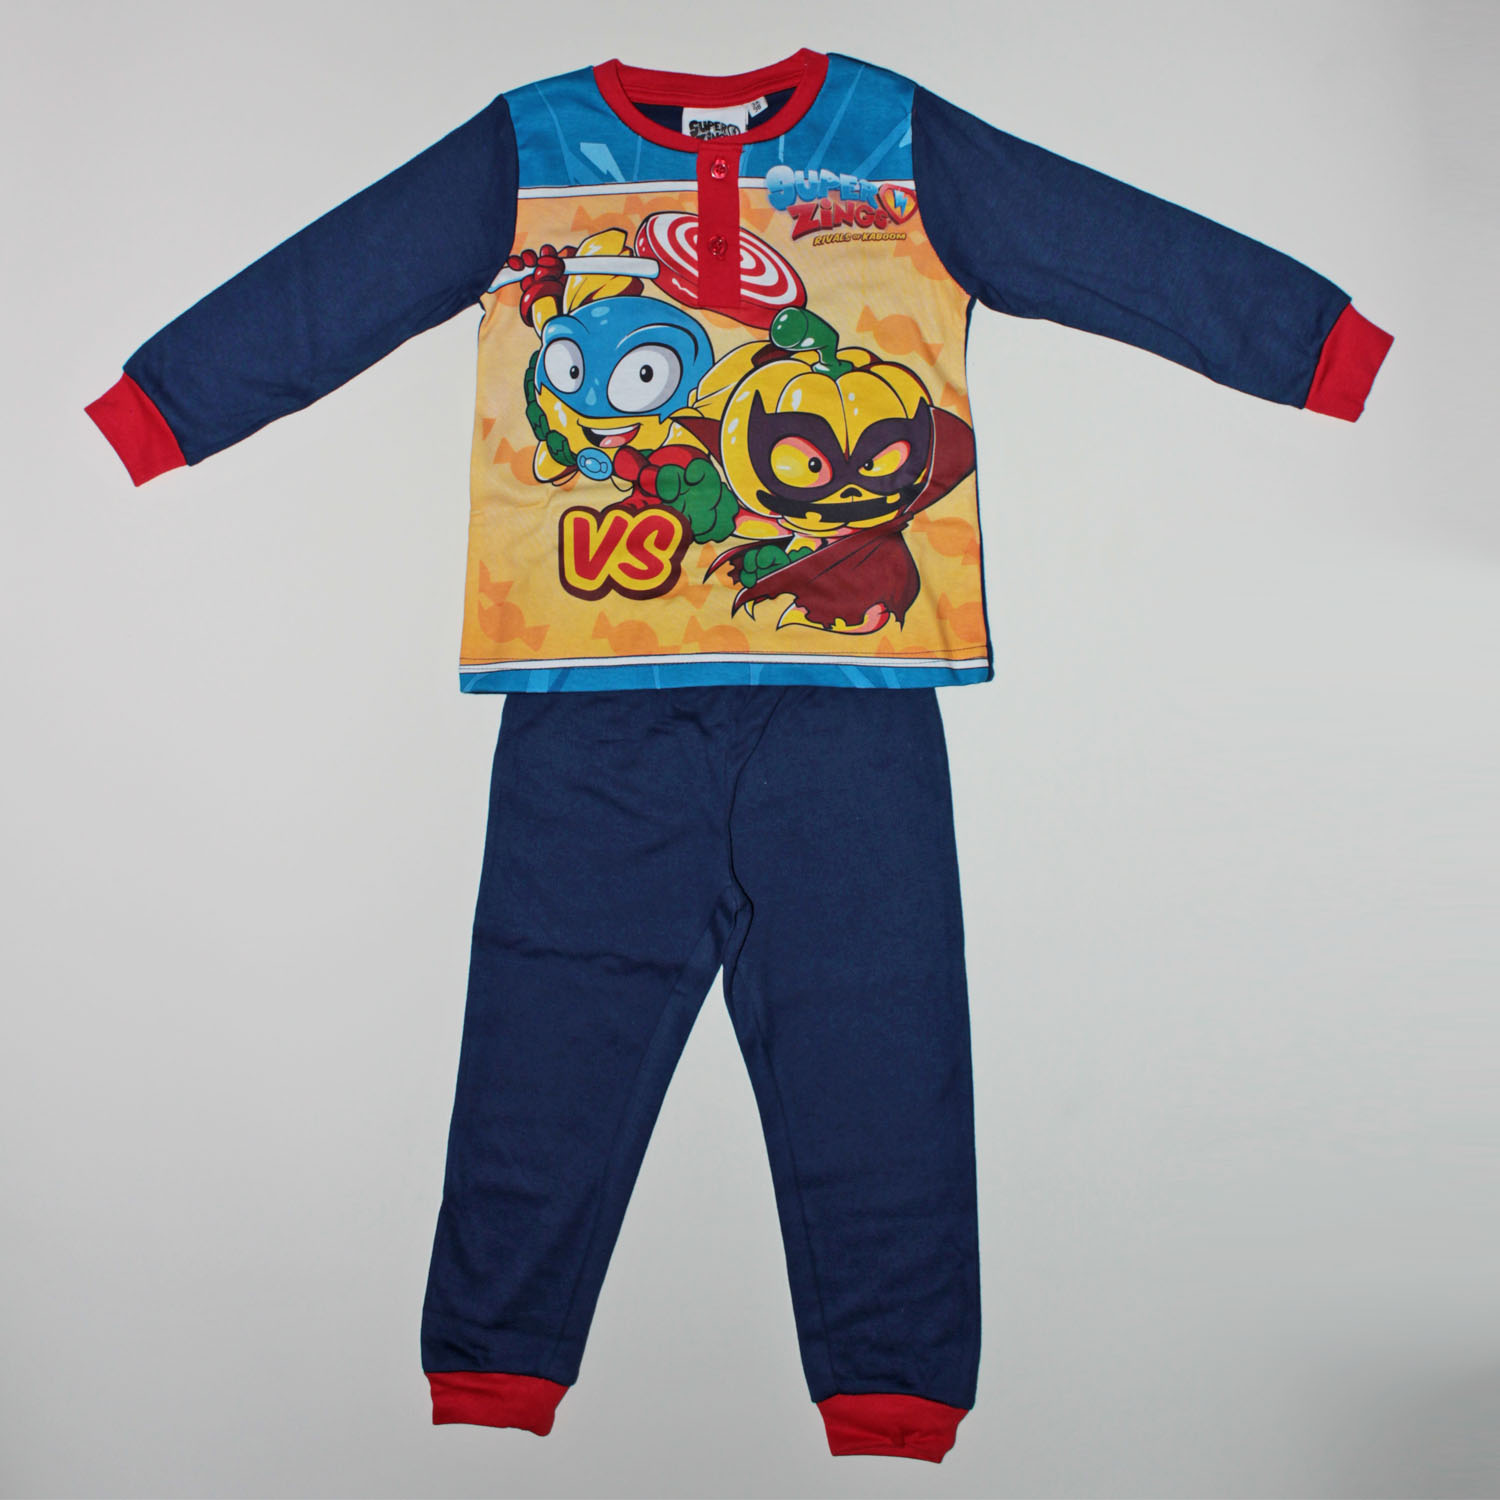 pijama infantil superzings o superthings para niño